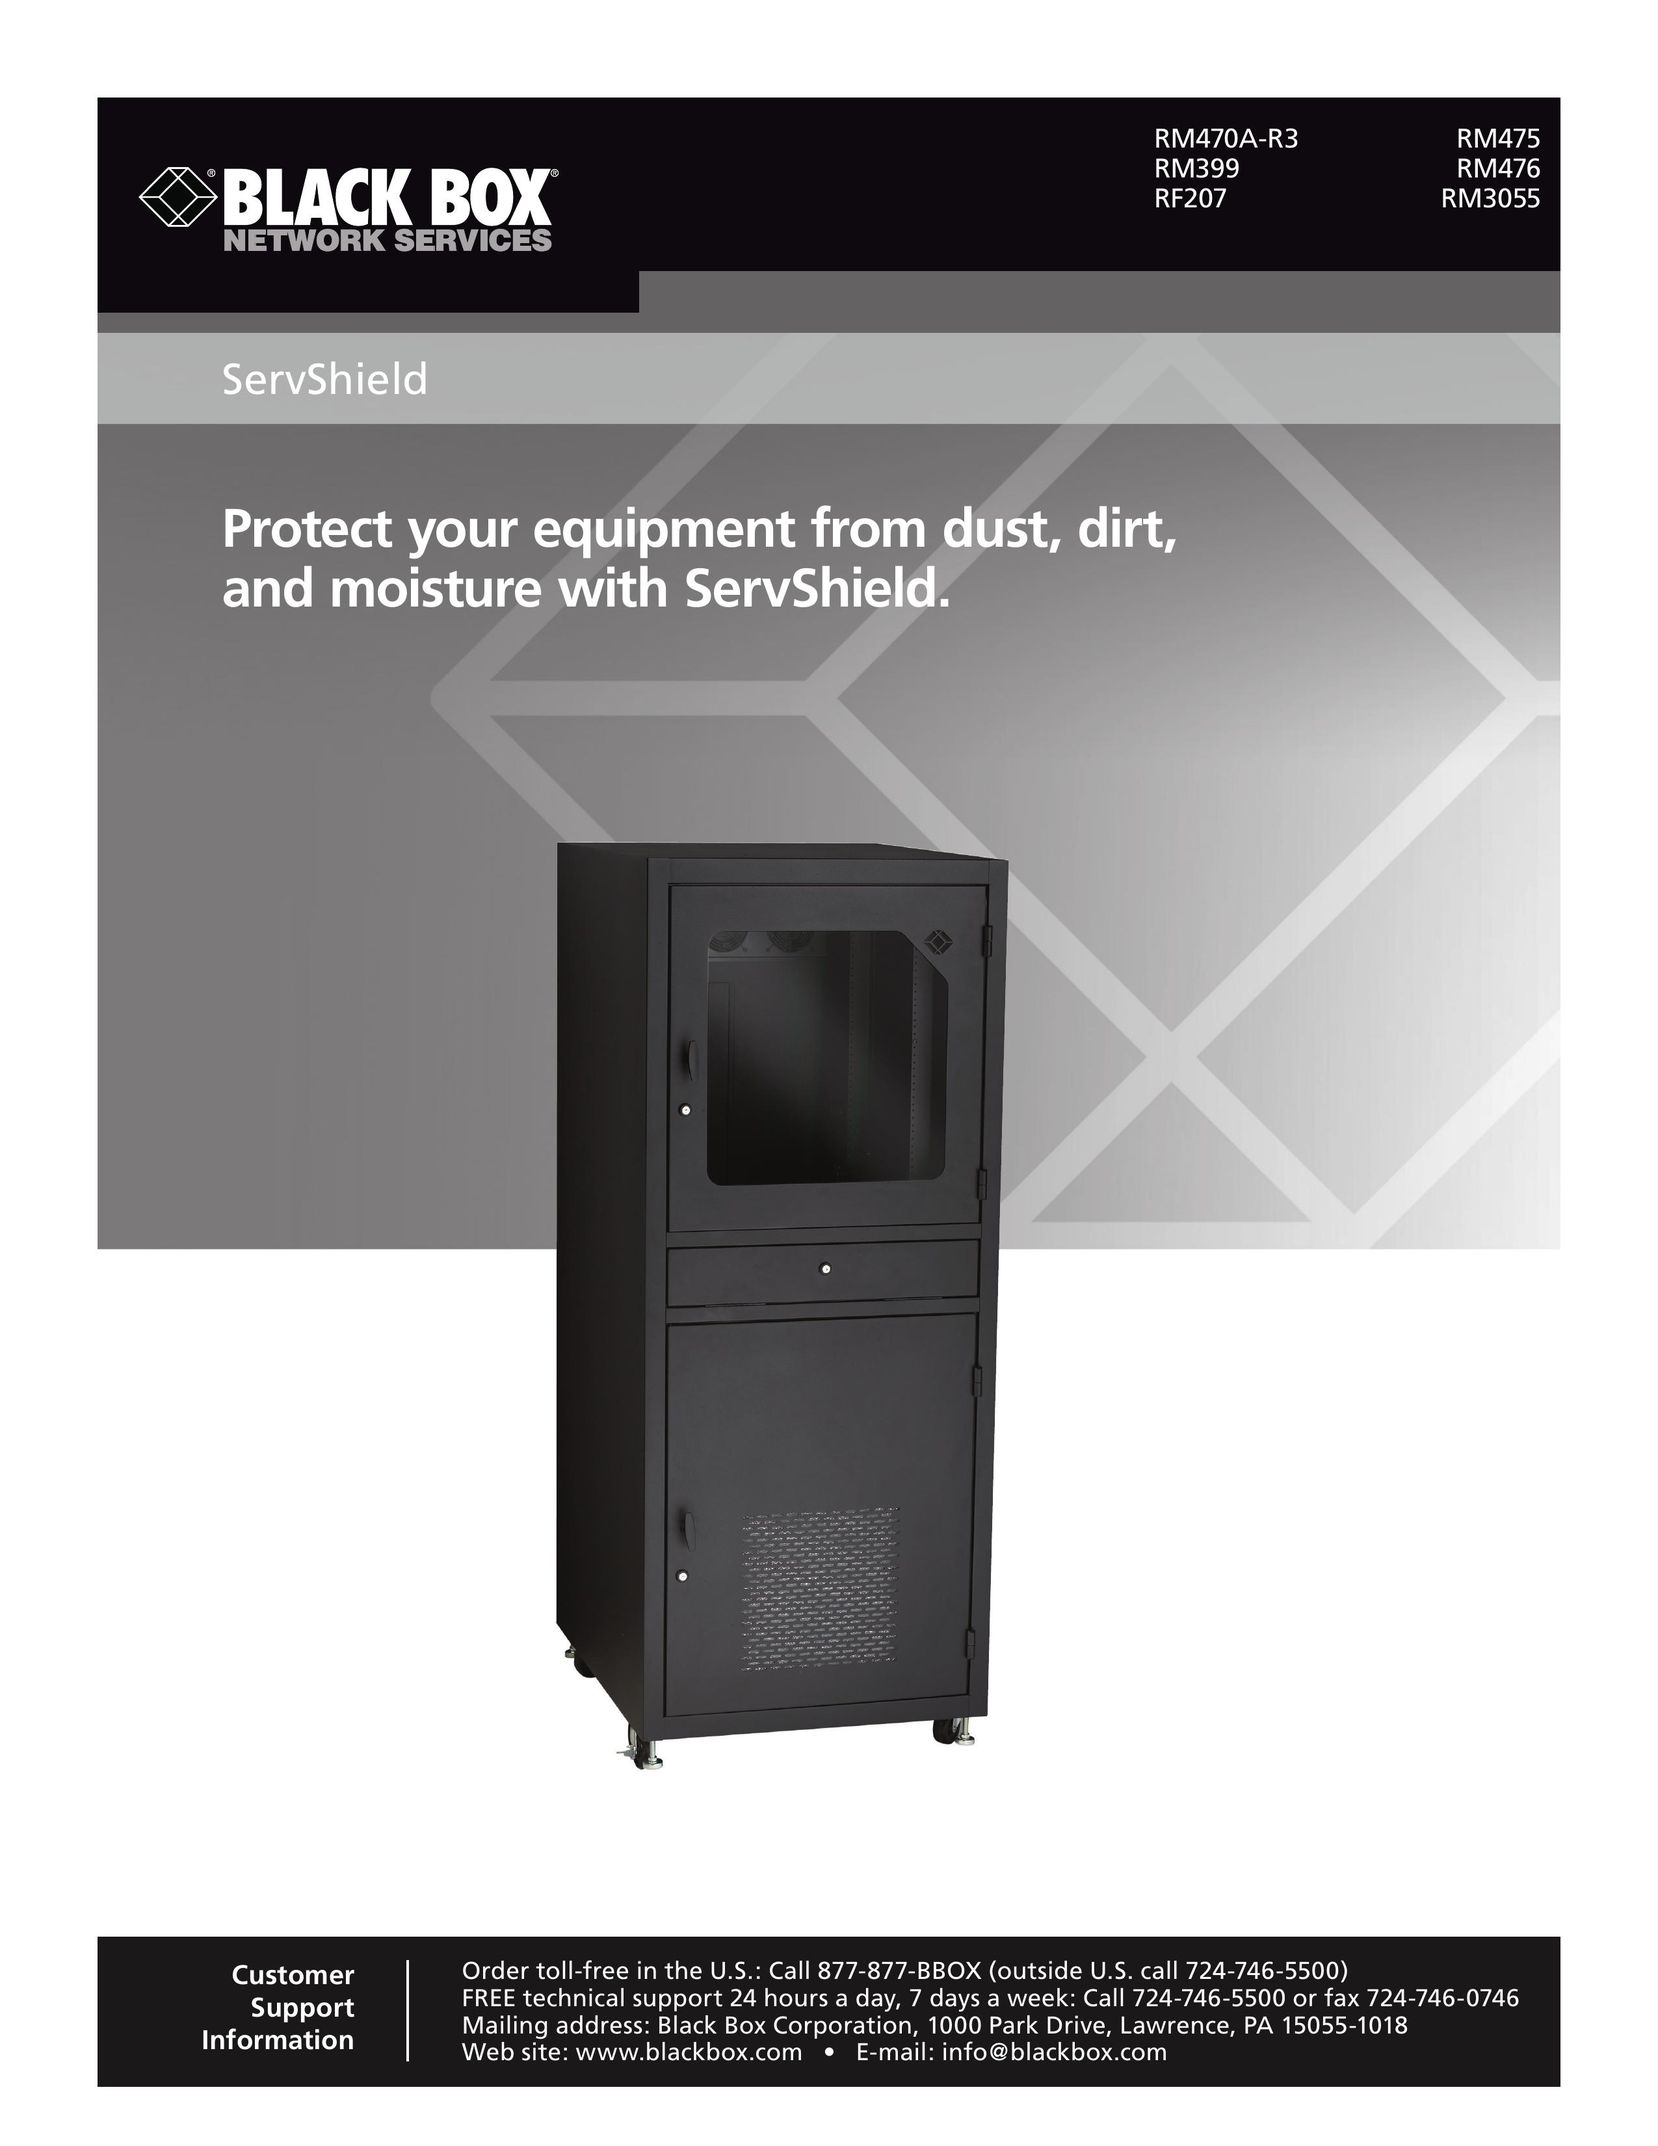 Black Box RF207 Home Theater Server User Manual